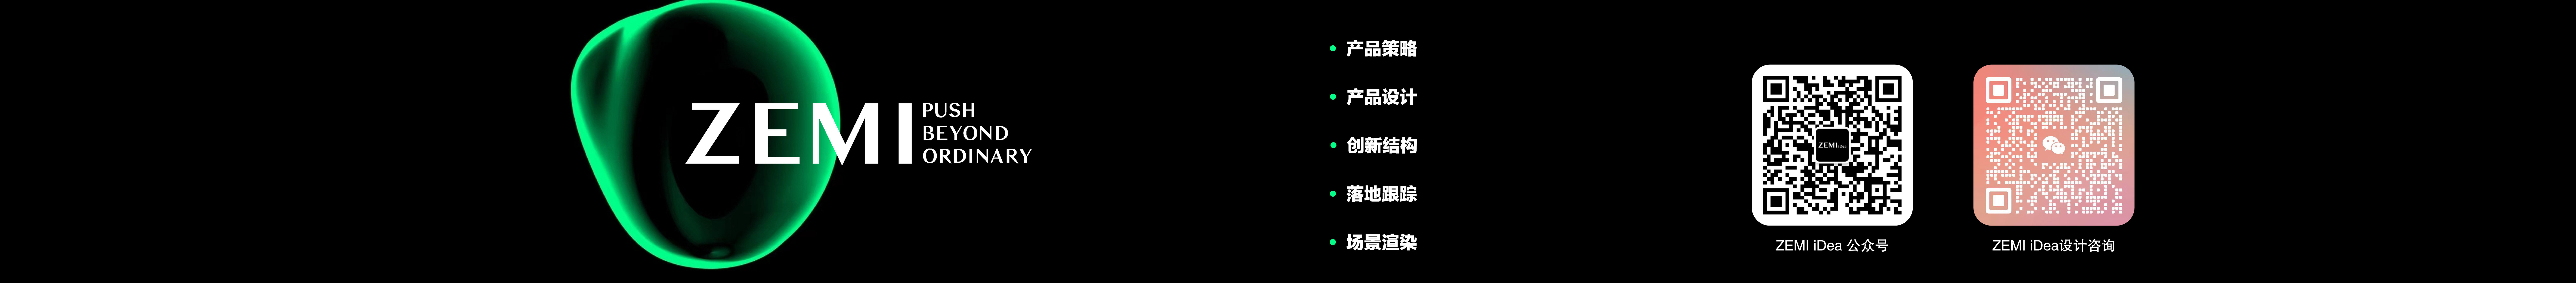 honfer zhang's profile banner